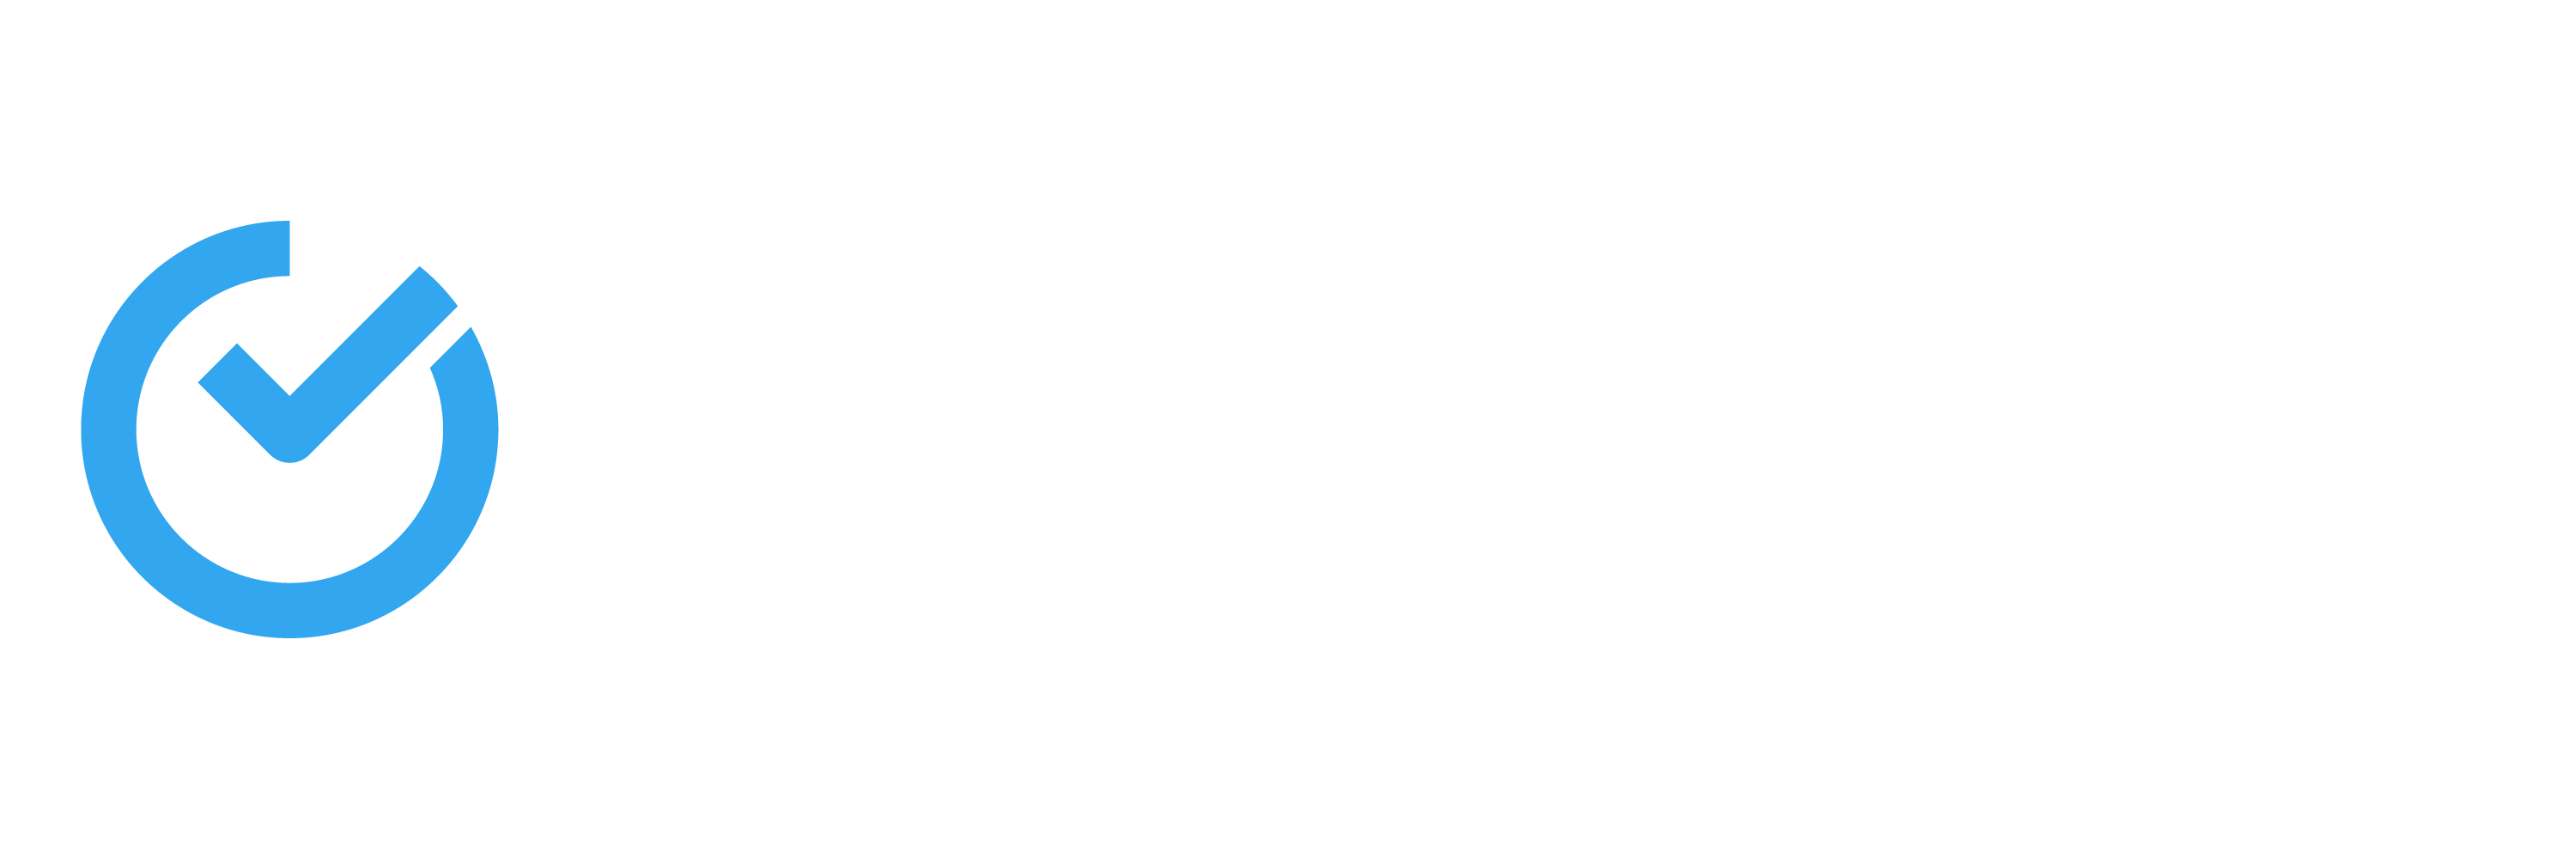 Shiftbase text logo light